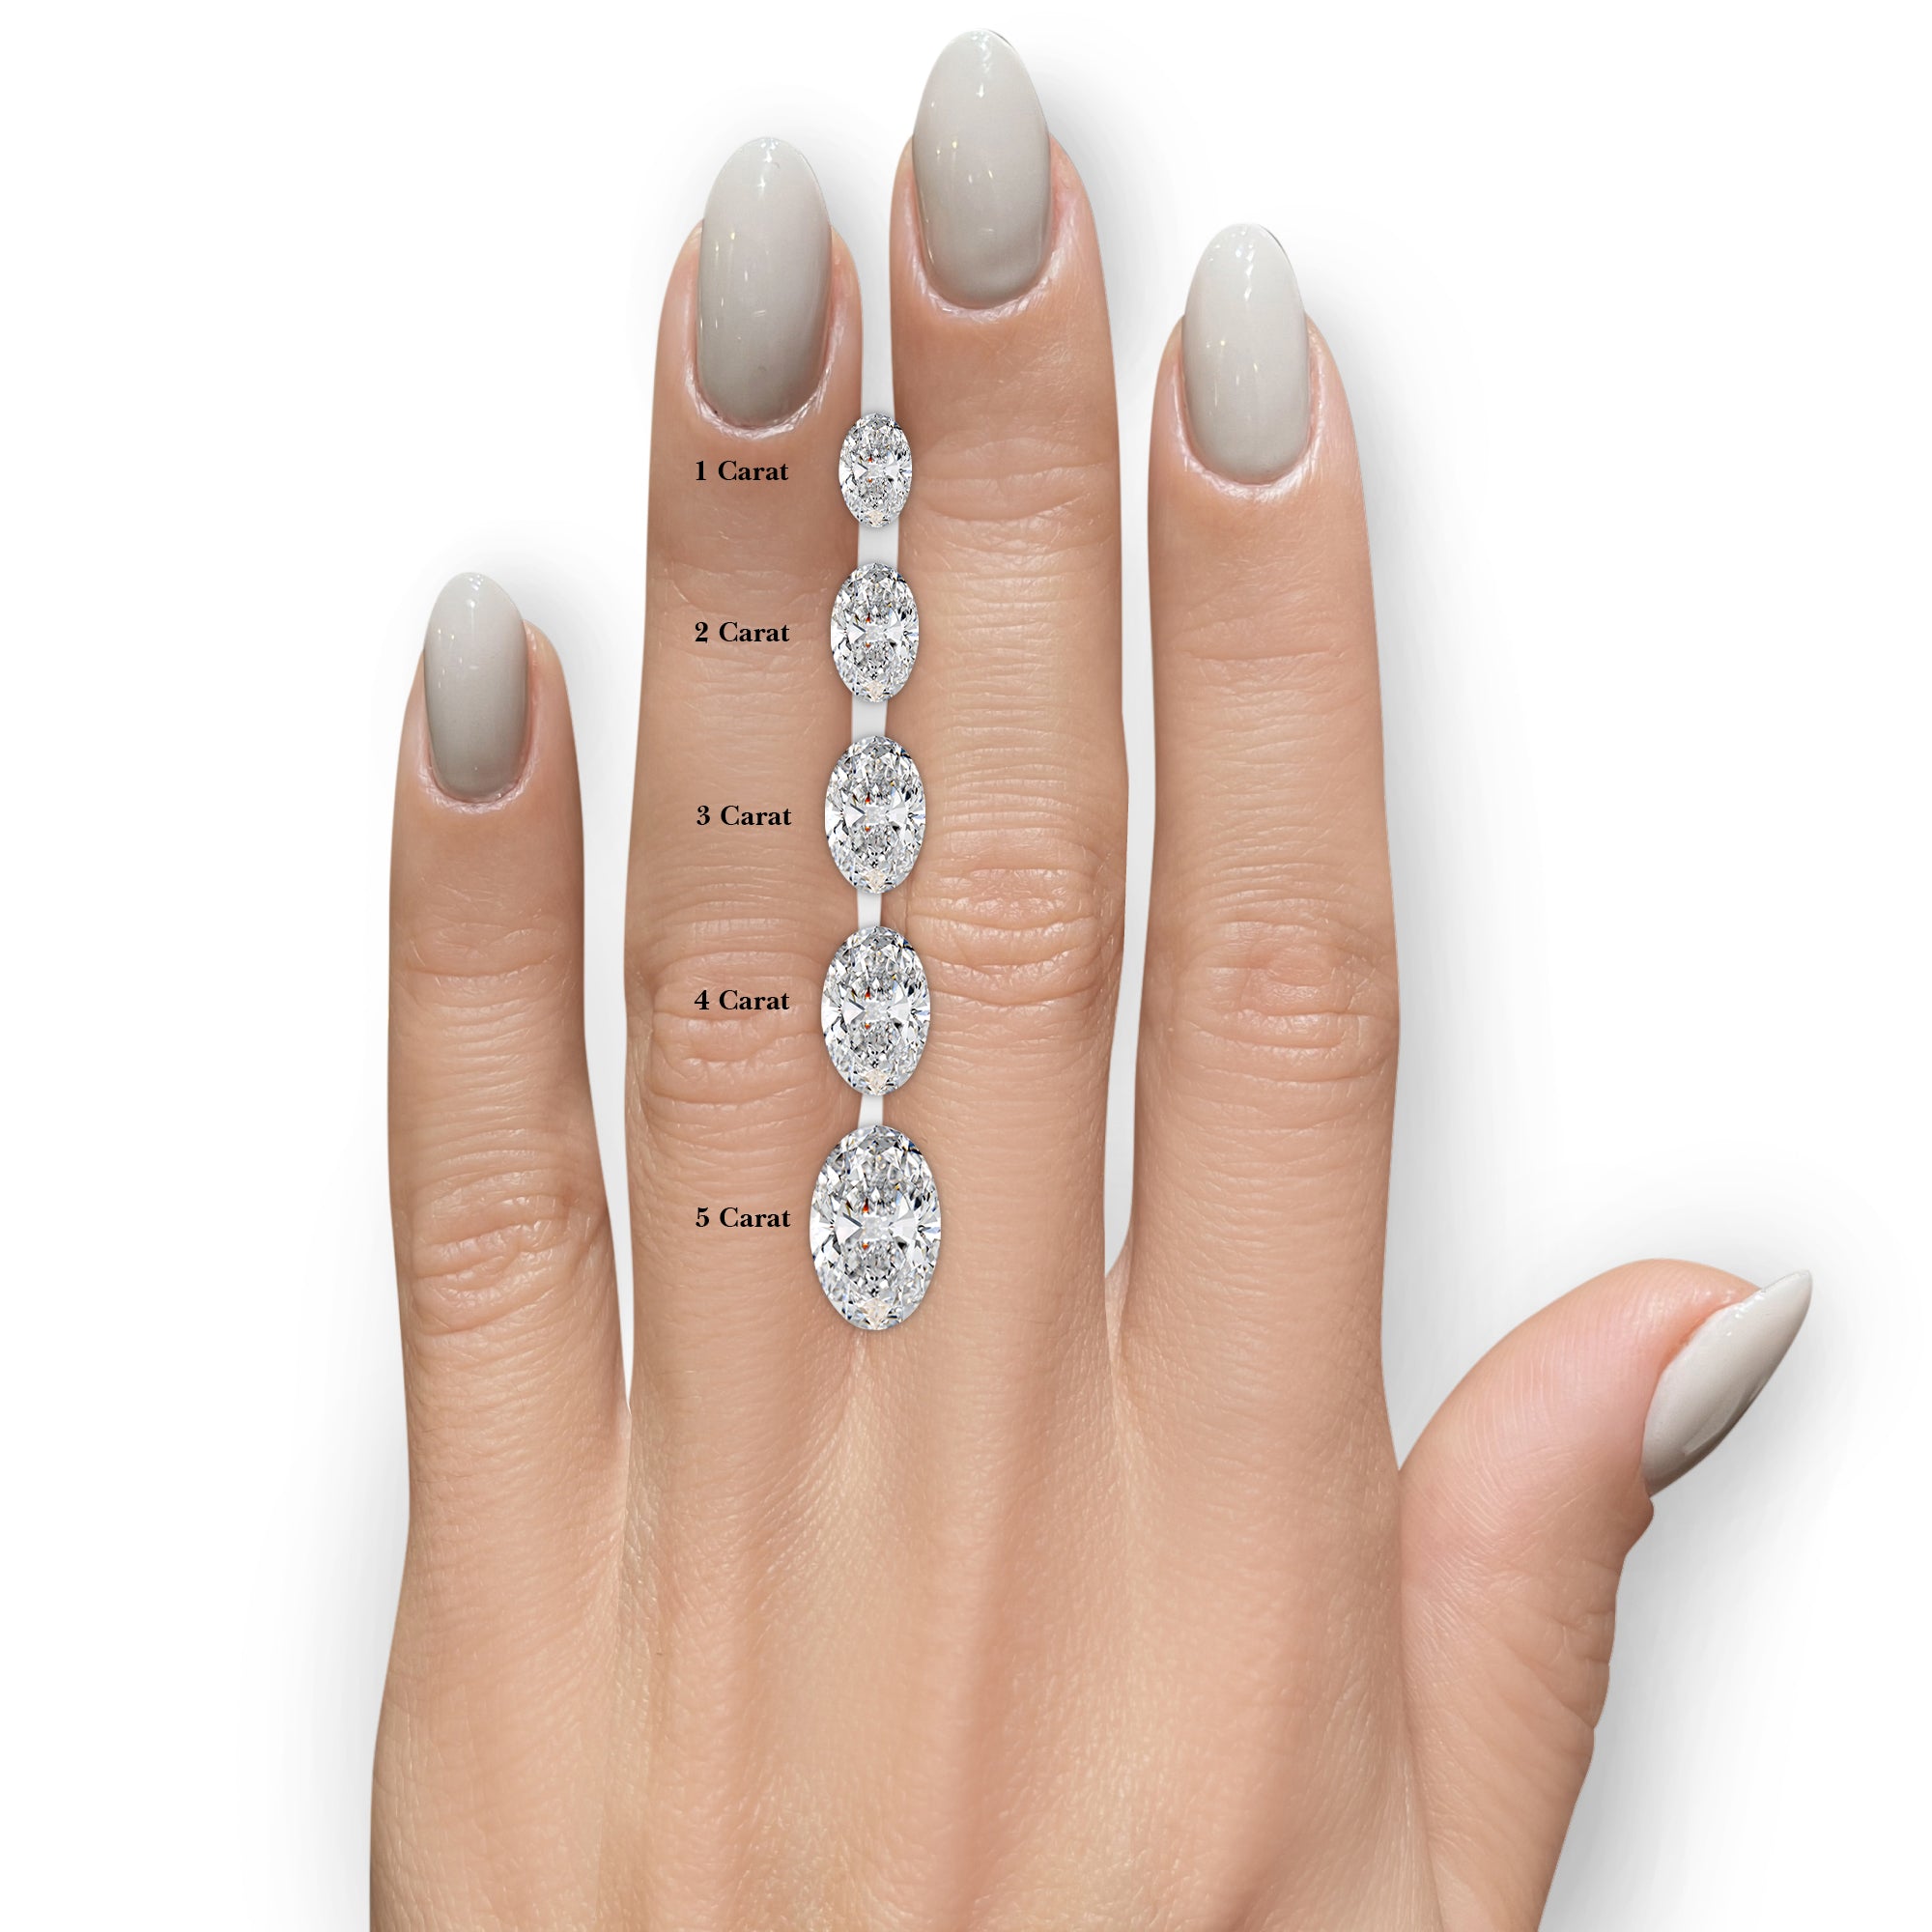 Willa Diamond Engagement Ring -14K Rose Gold